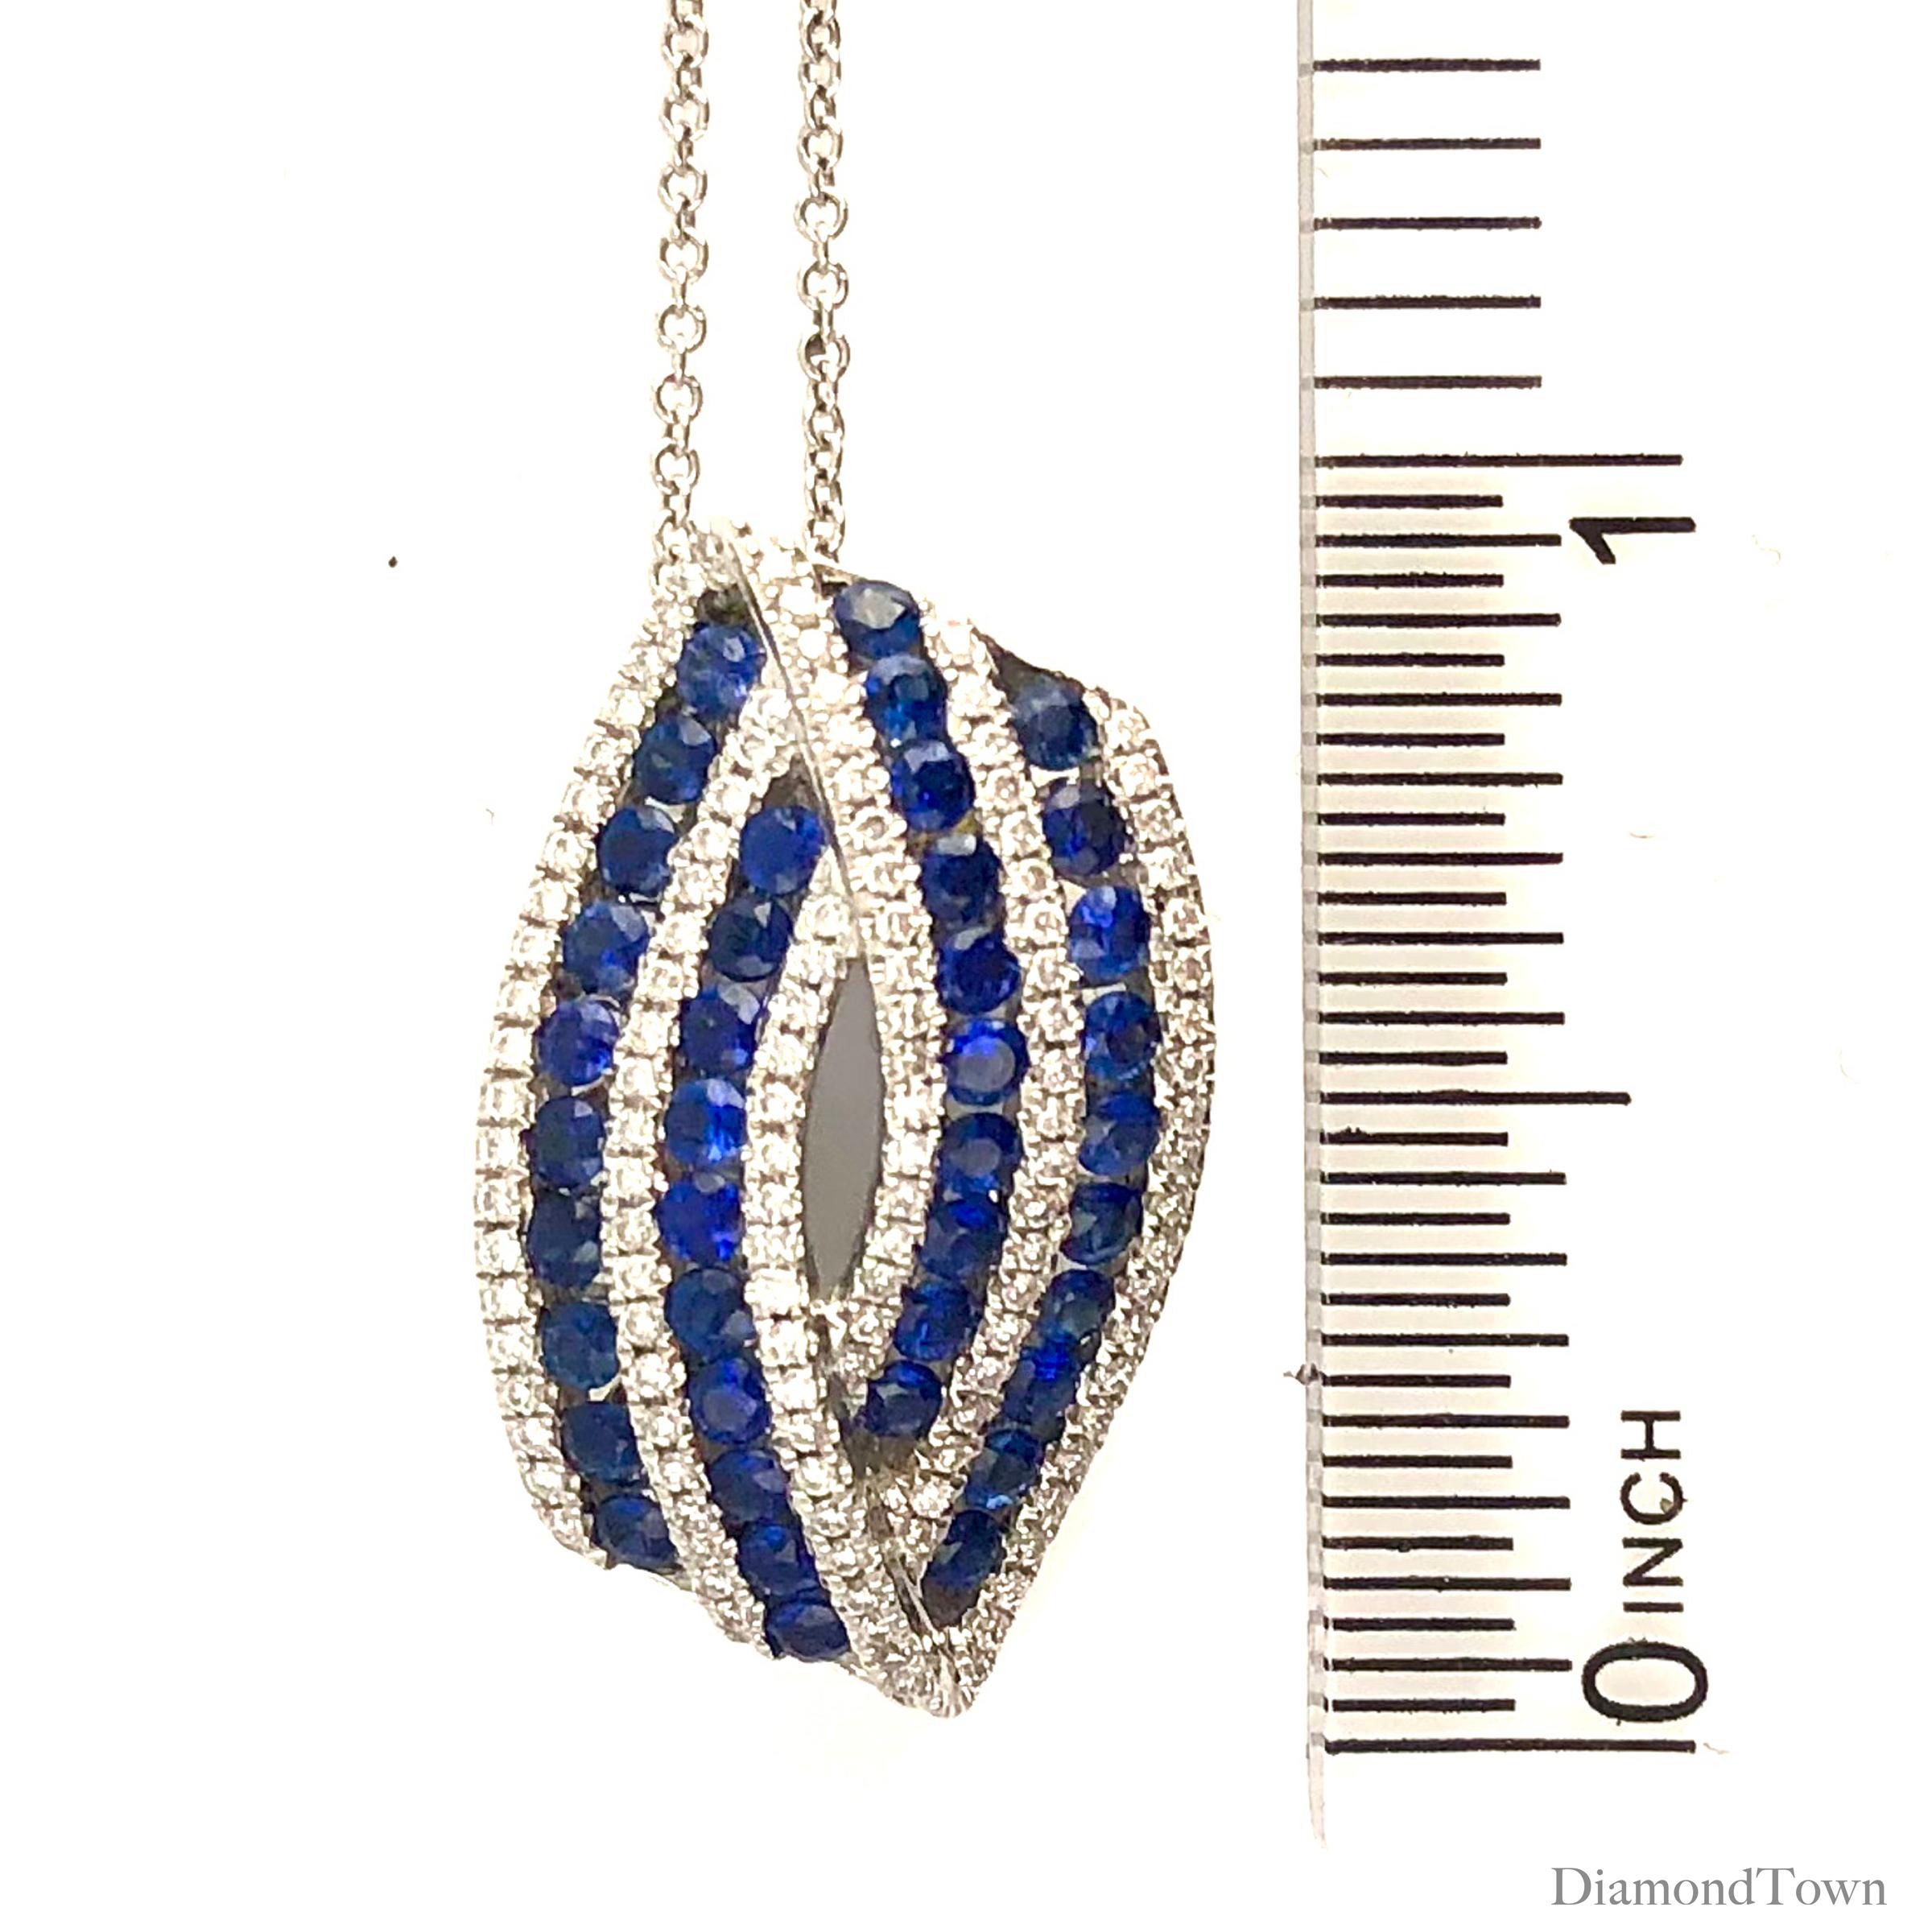 Contemporary 1.11 Carat Ceylon Sapphire and 0.32 Carat Natural Diamond Pendant in 18W ref373 For Sale